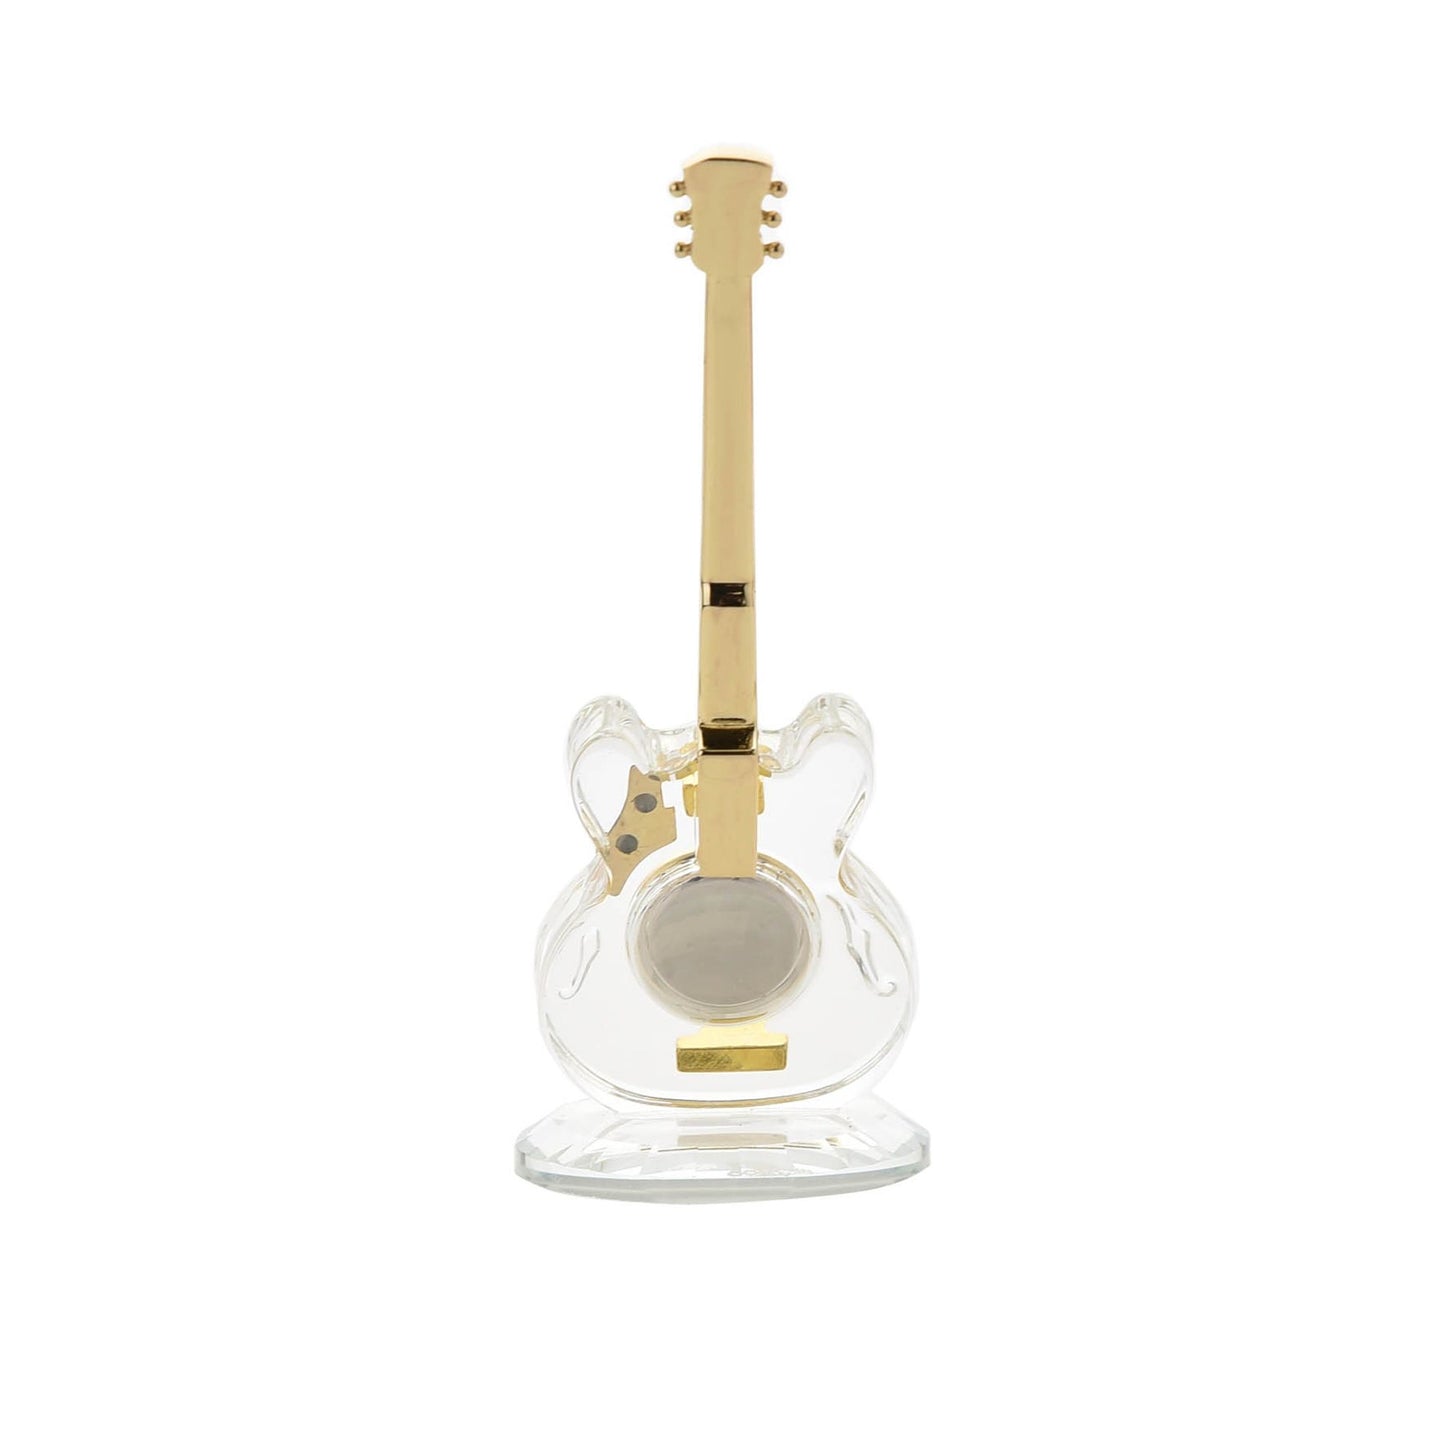 William Widdop Metal Miniature Clock - Glass Guitar